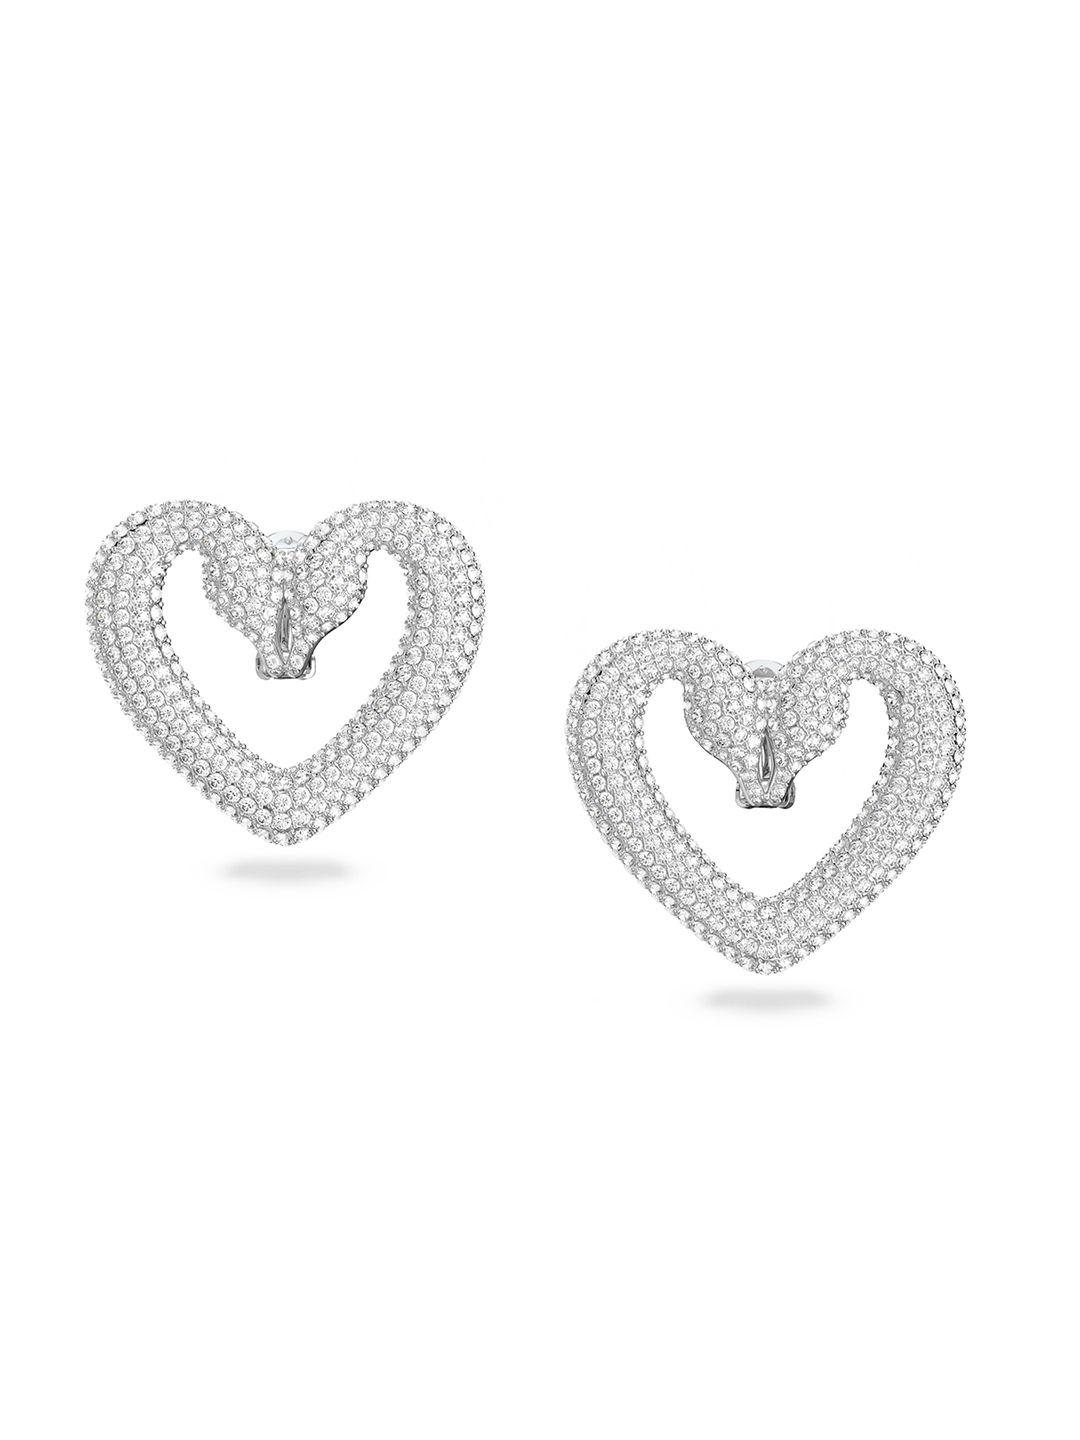 swarovski white crystals studded heart shaped studs earrings